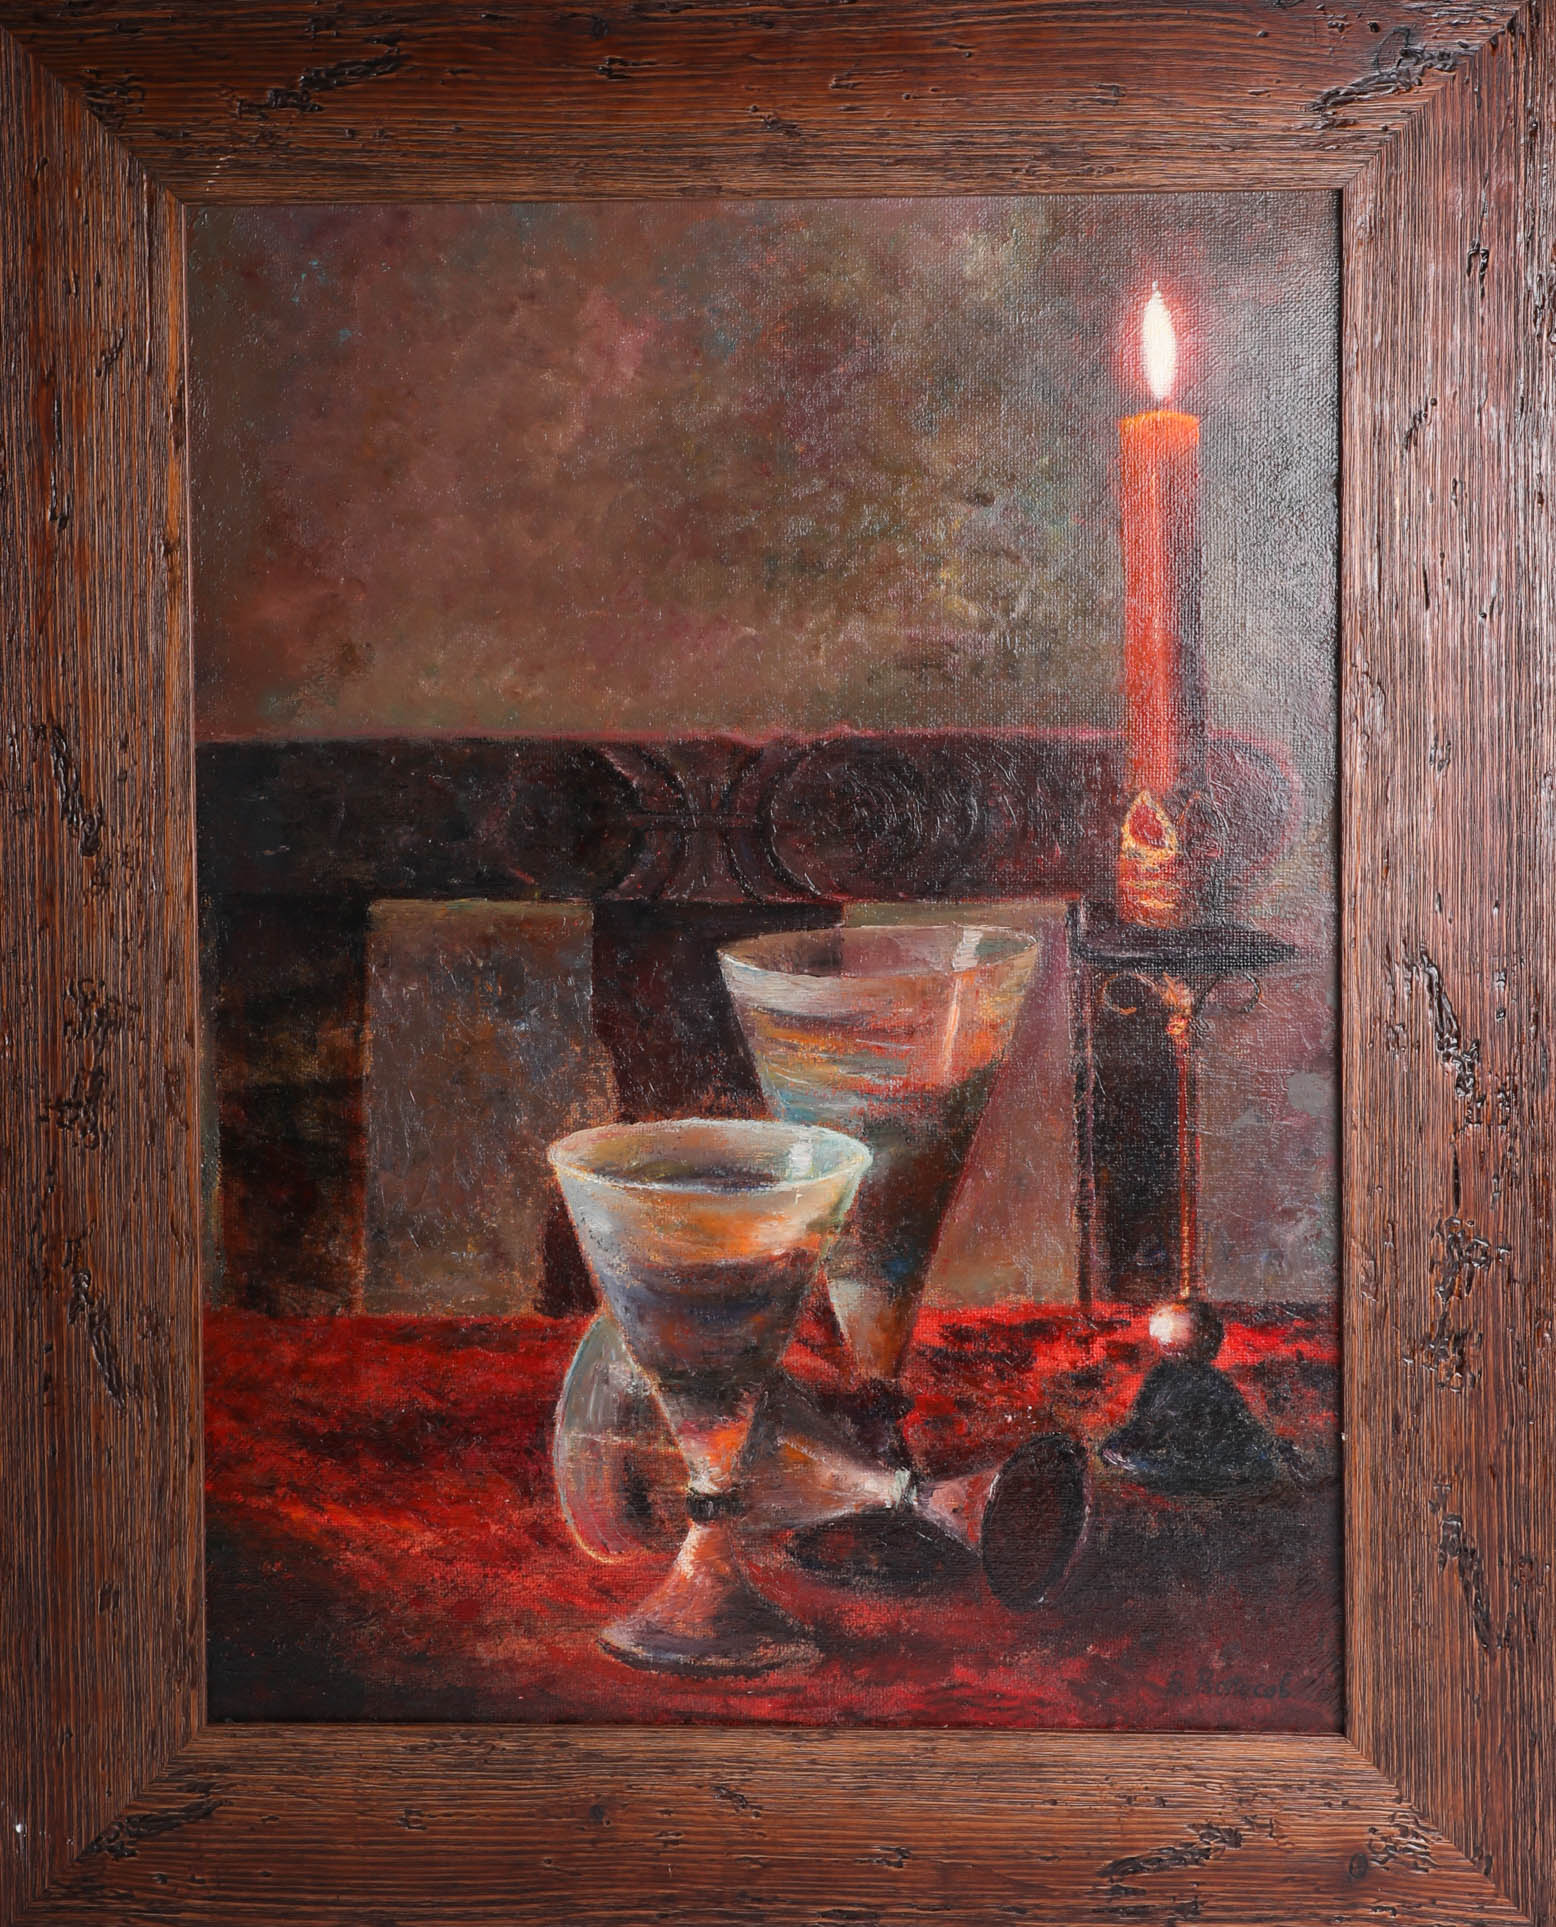 Vladimir Volosov 'Still Life with Candle' oil on canvas, 2001, signed, framed, 60cm x 45cm.